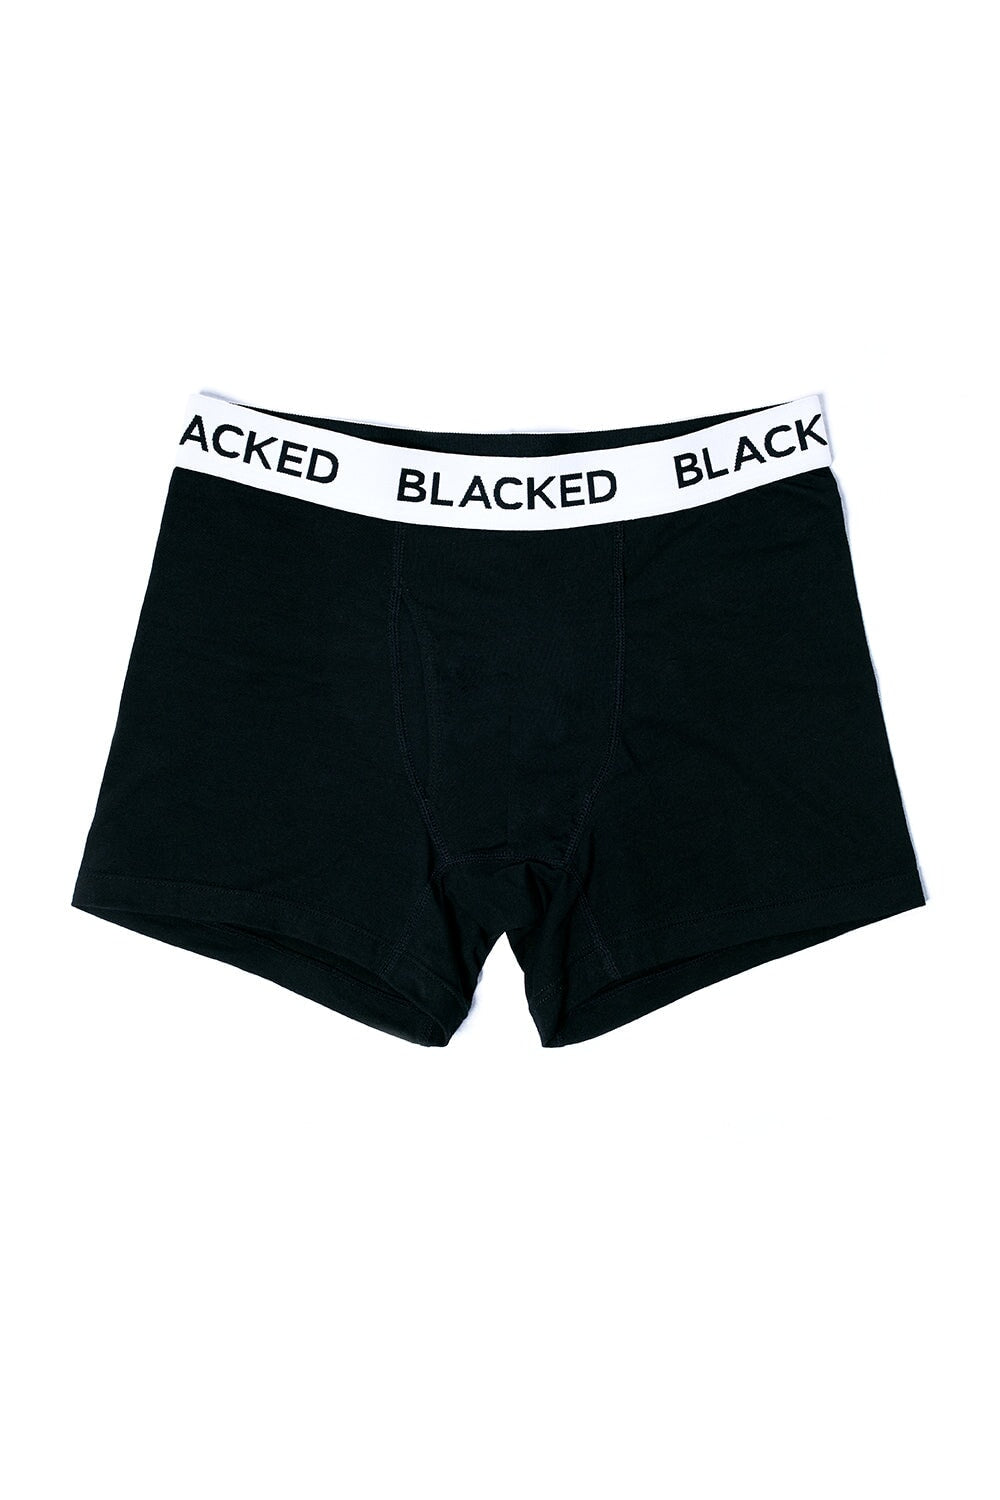 Blacked Boxer Briefs